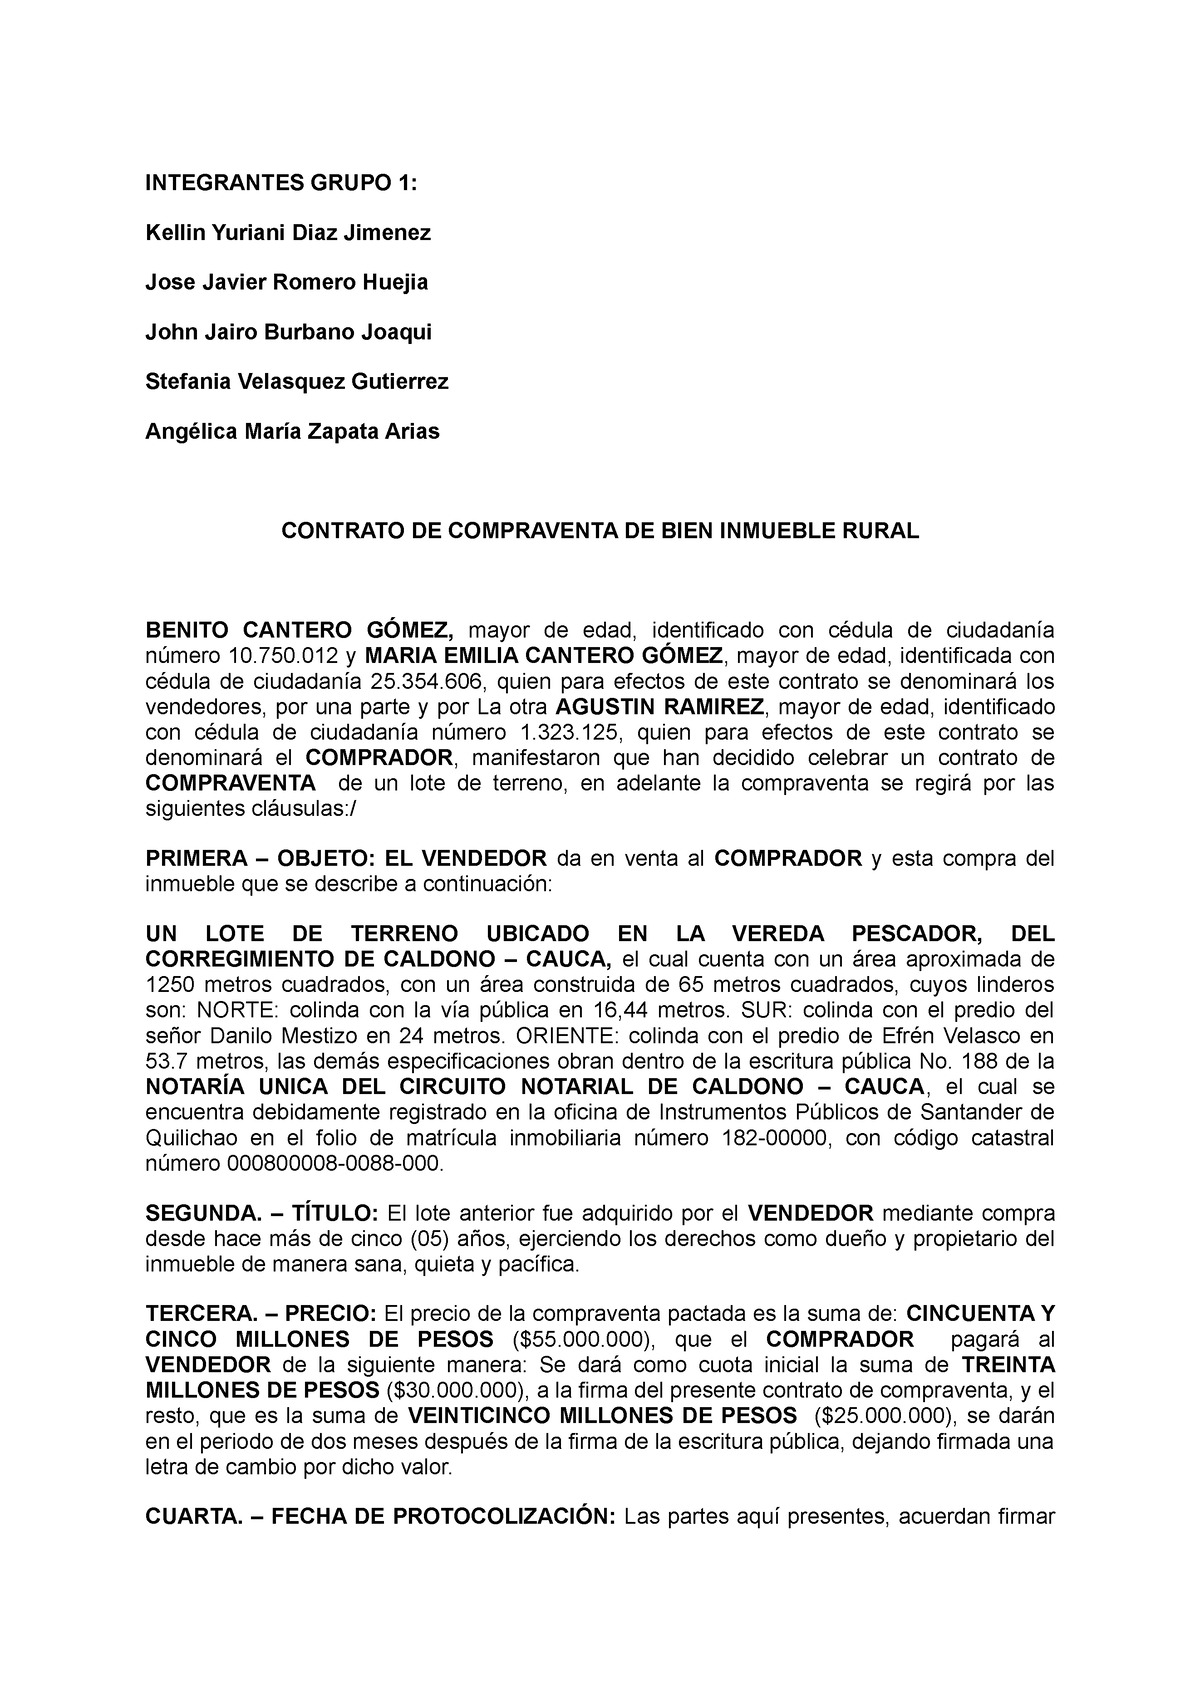 Contrato DE Compraventa DE BIEN Inmueble Rural - INTEGRANTES GRUPO 1:  Kellin Yuriani Diaz Jimenez - Studocu